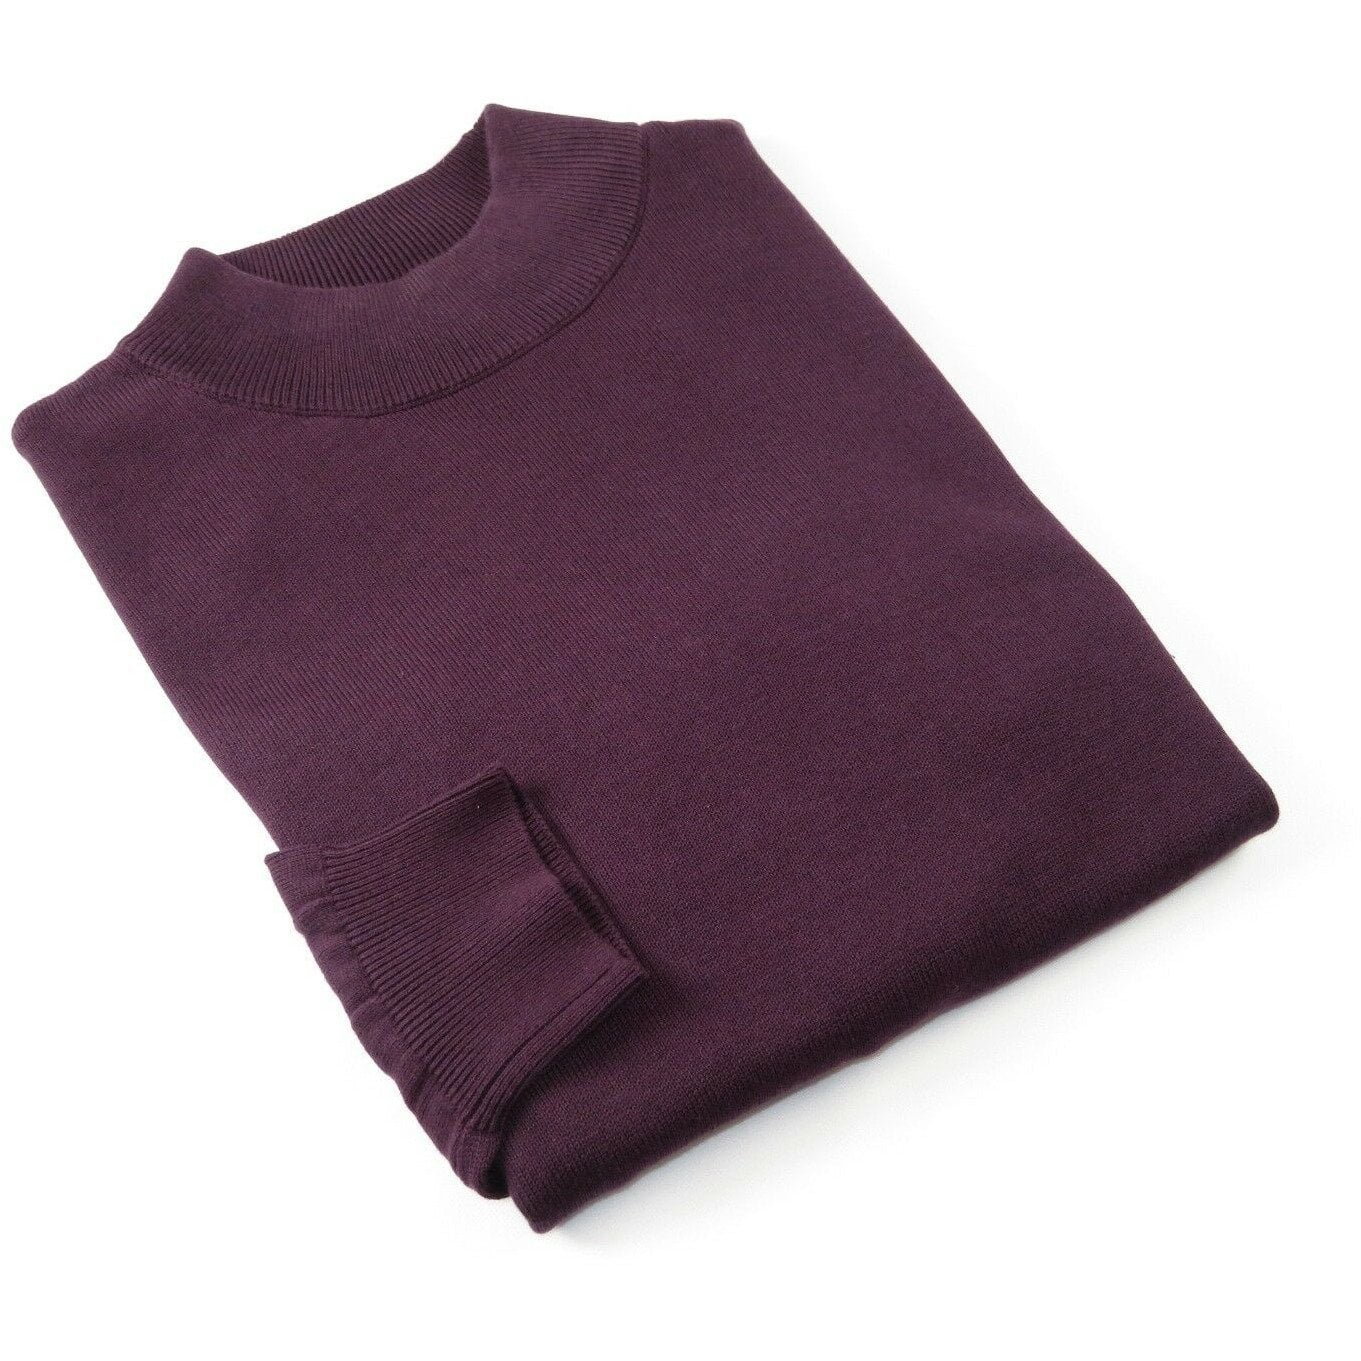 Mens Inserch Mock Neck Pullover Knit Soft Cotton Blend Sweater Winter 4308 Plum 